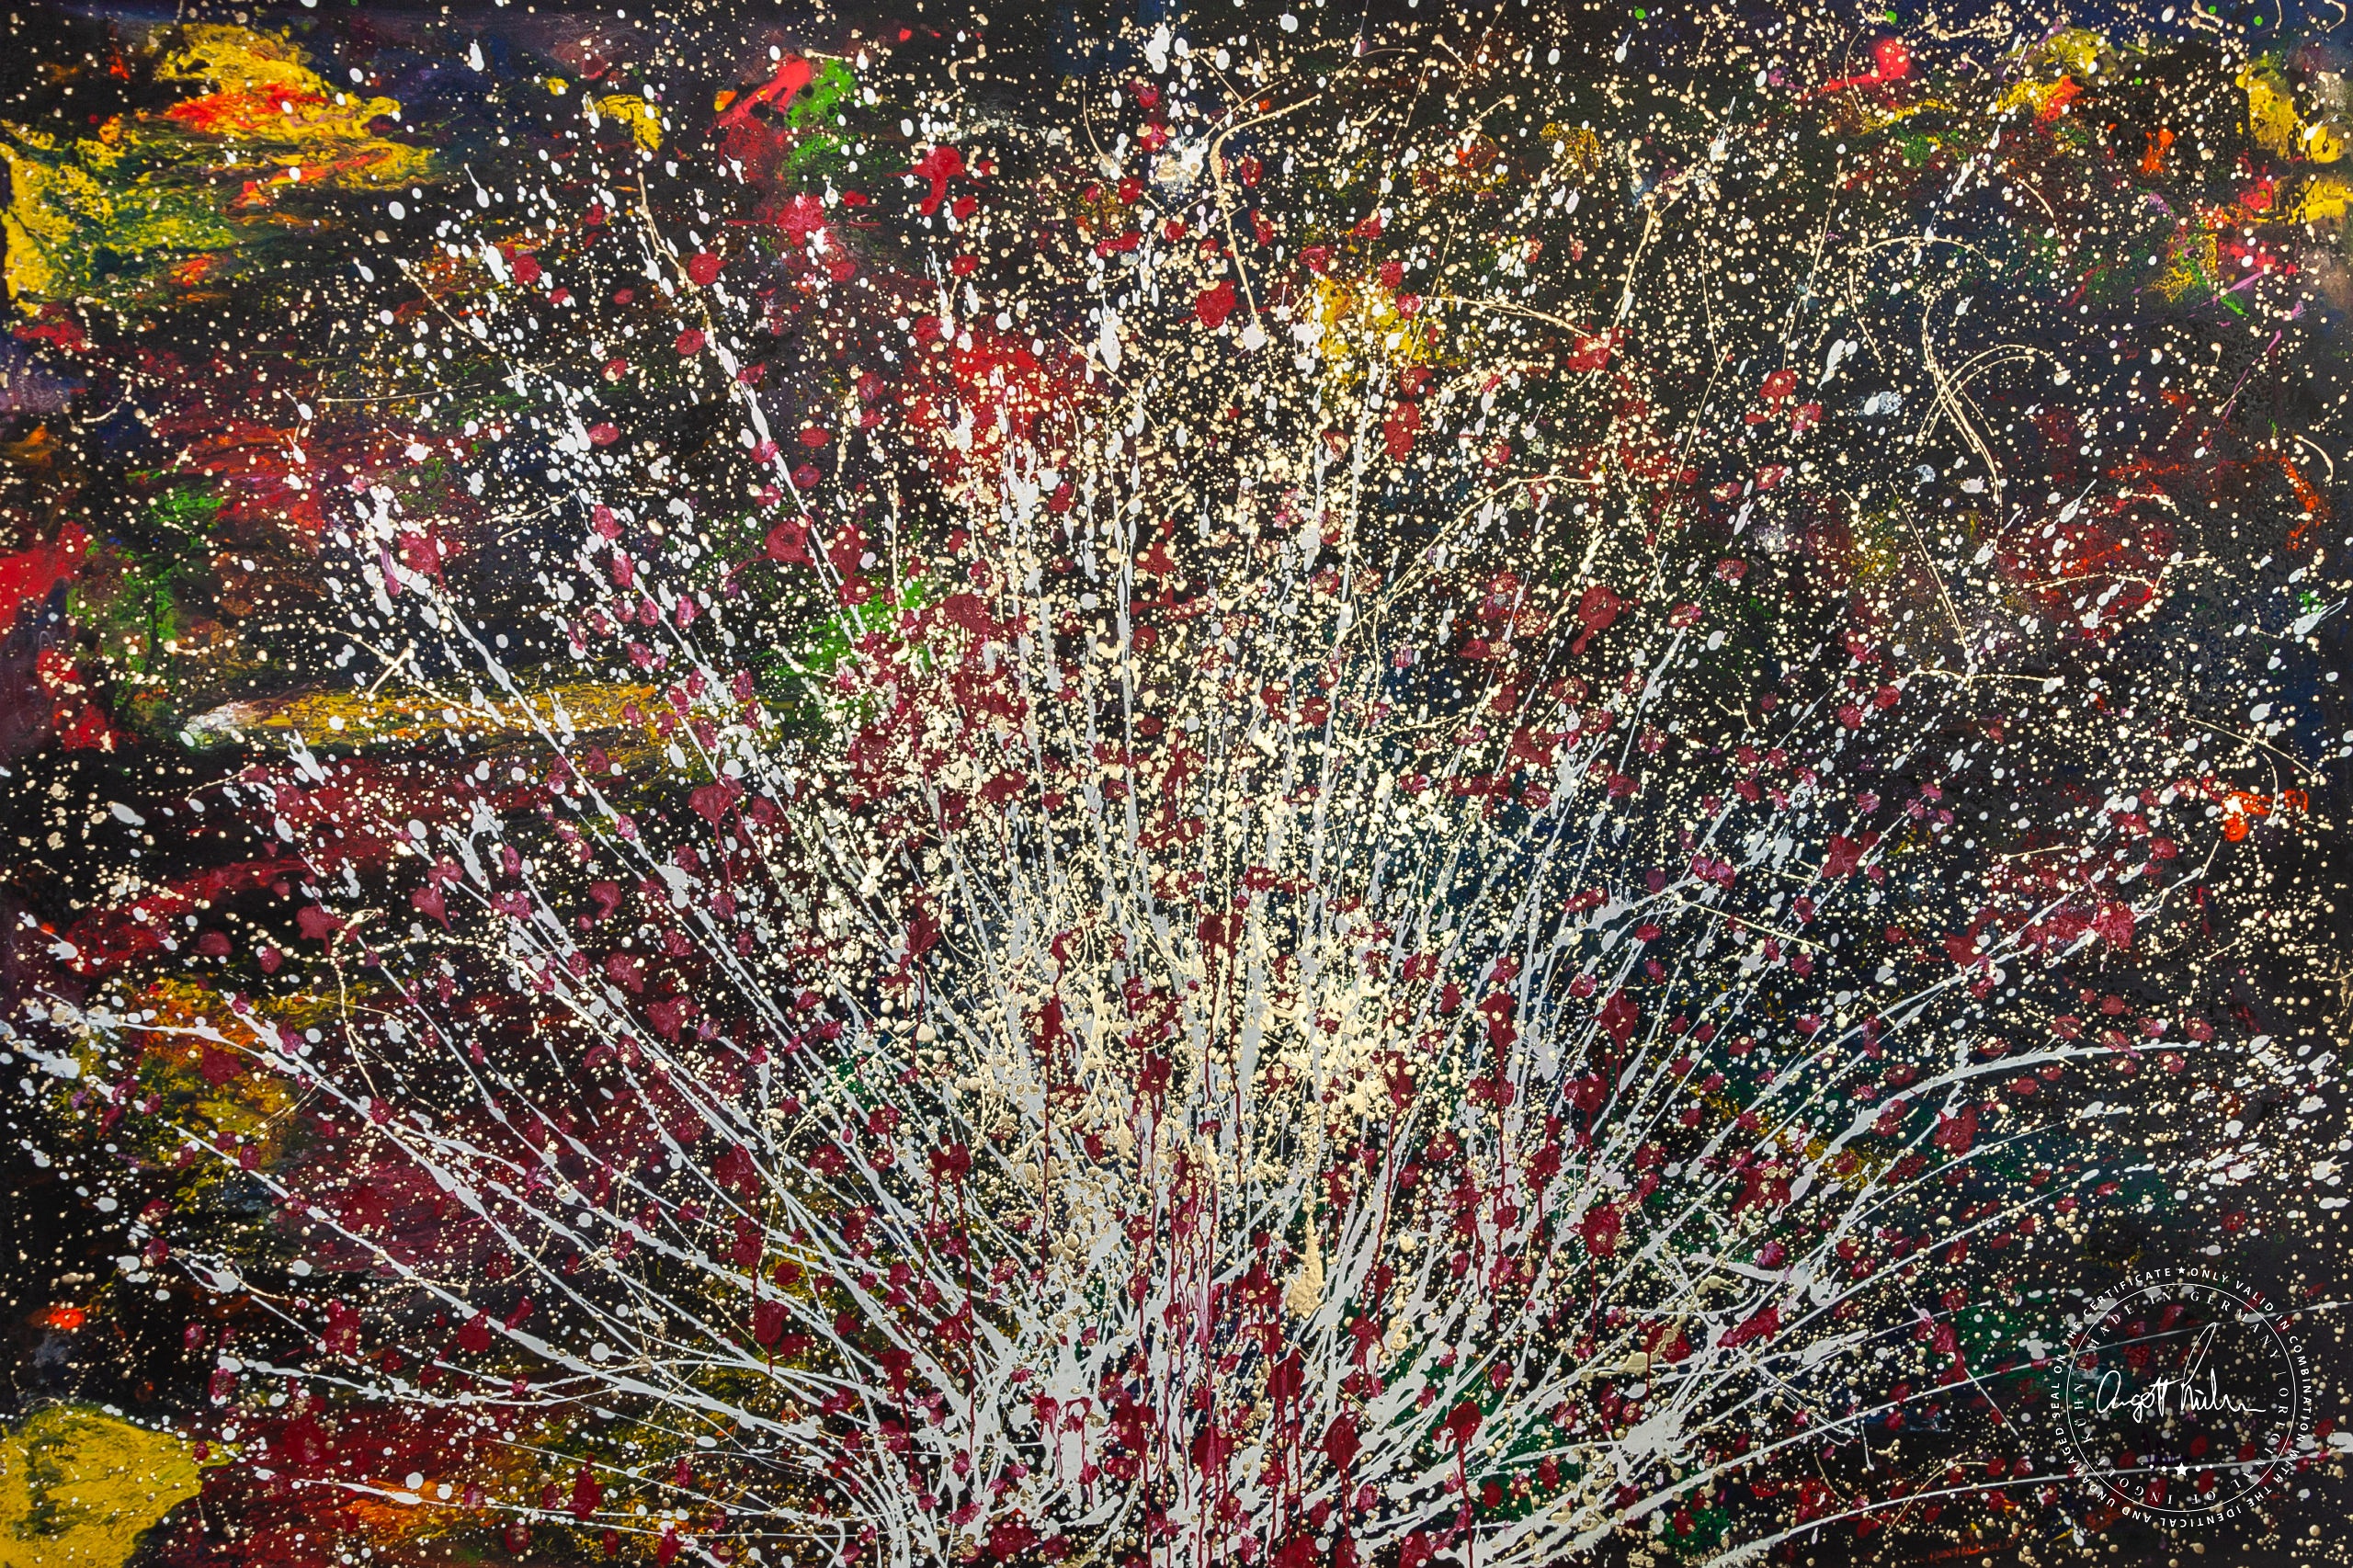 Artwork by Ingolf Kühn Nocturnal Fireworks Art-No 11011 acrylic on dibond 305x205 2018